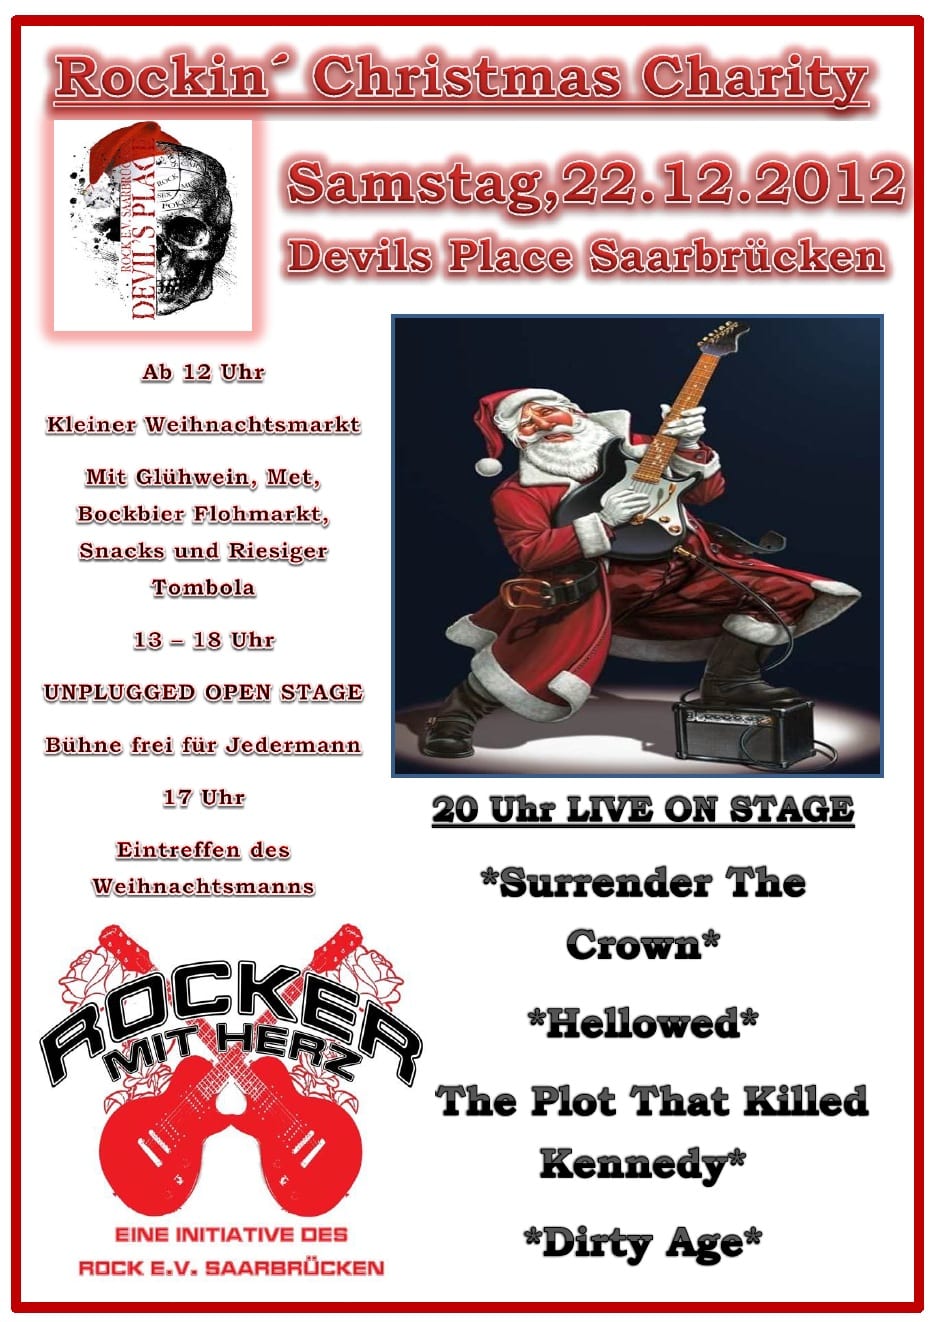 Devils Place Saarbrücken Christmas Charity 2012 Flyer